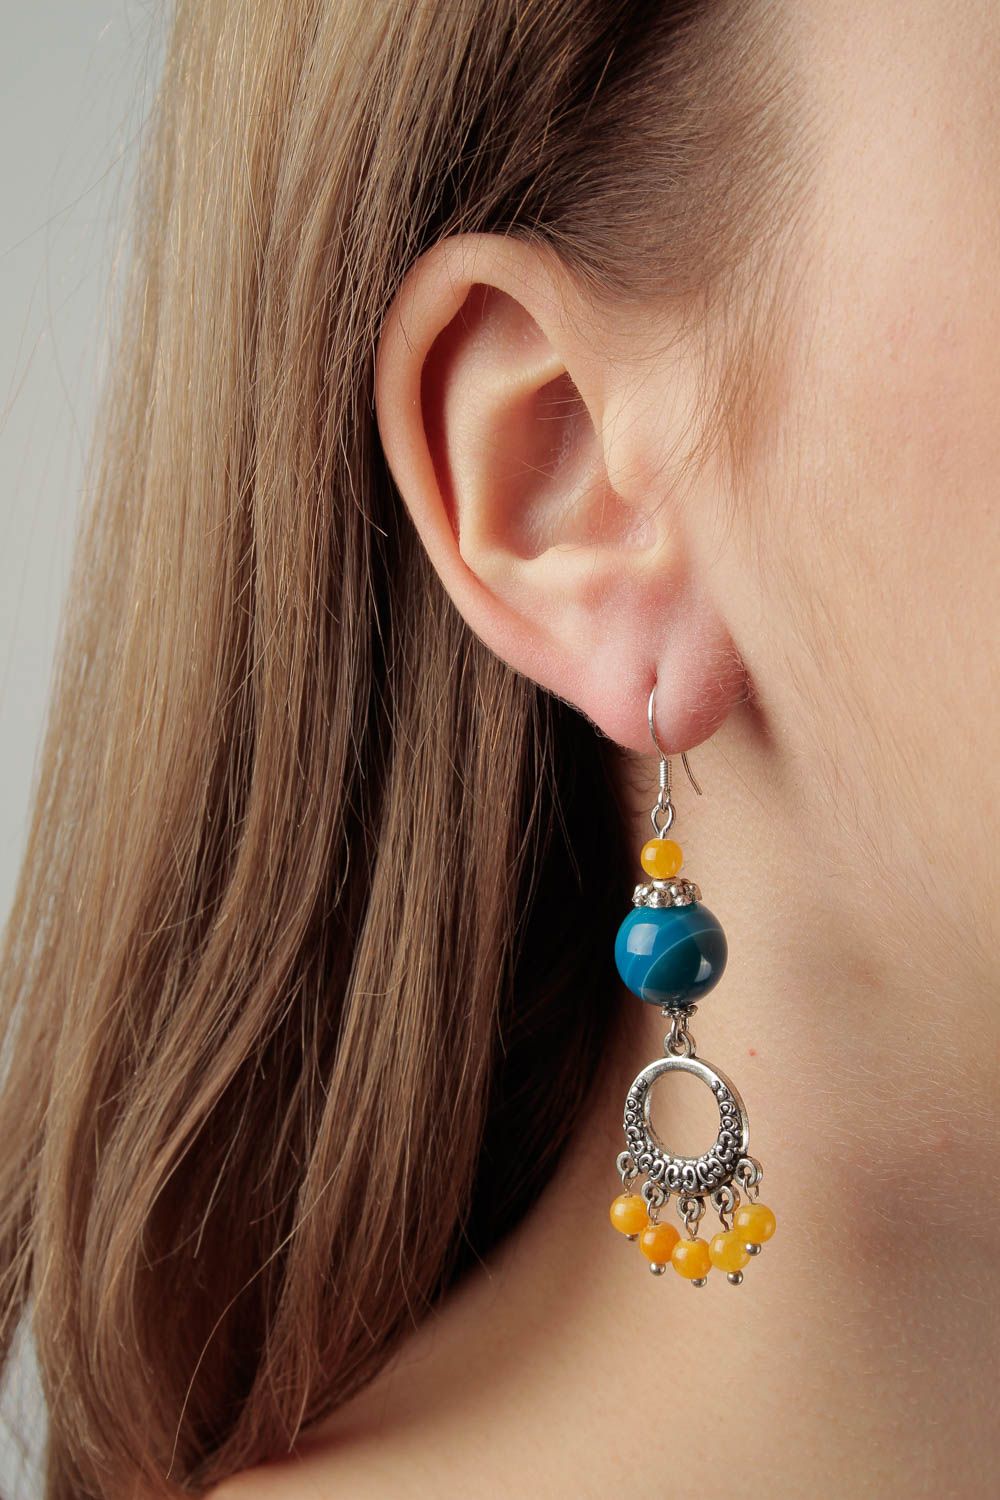 Handmade stylish cute earrings designer natural stone earrings beautiful jewelry photo 1